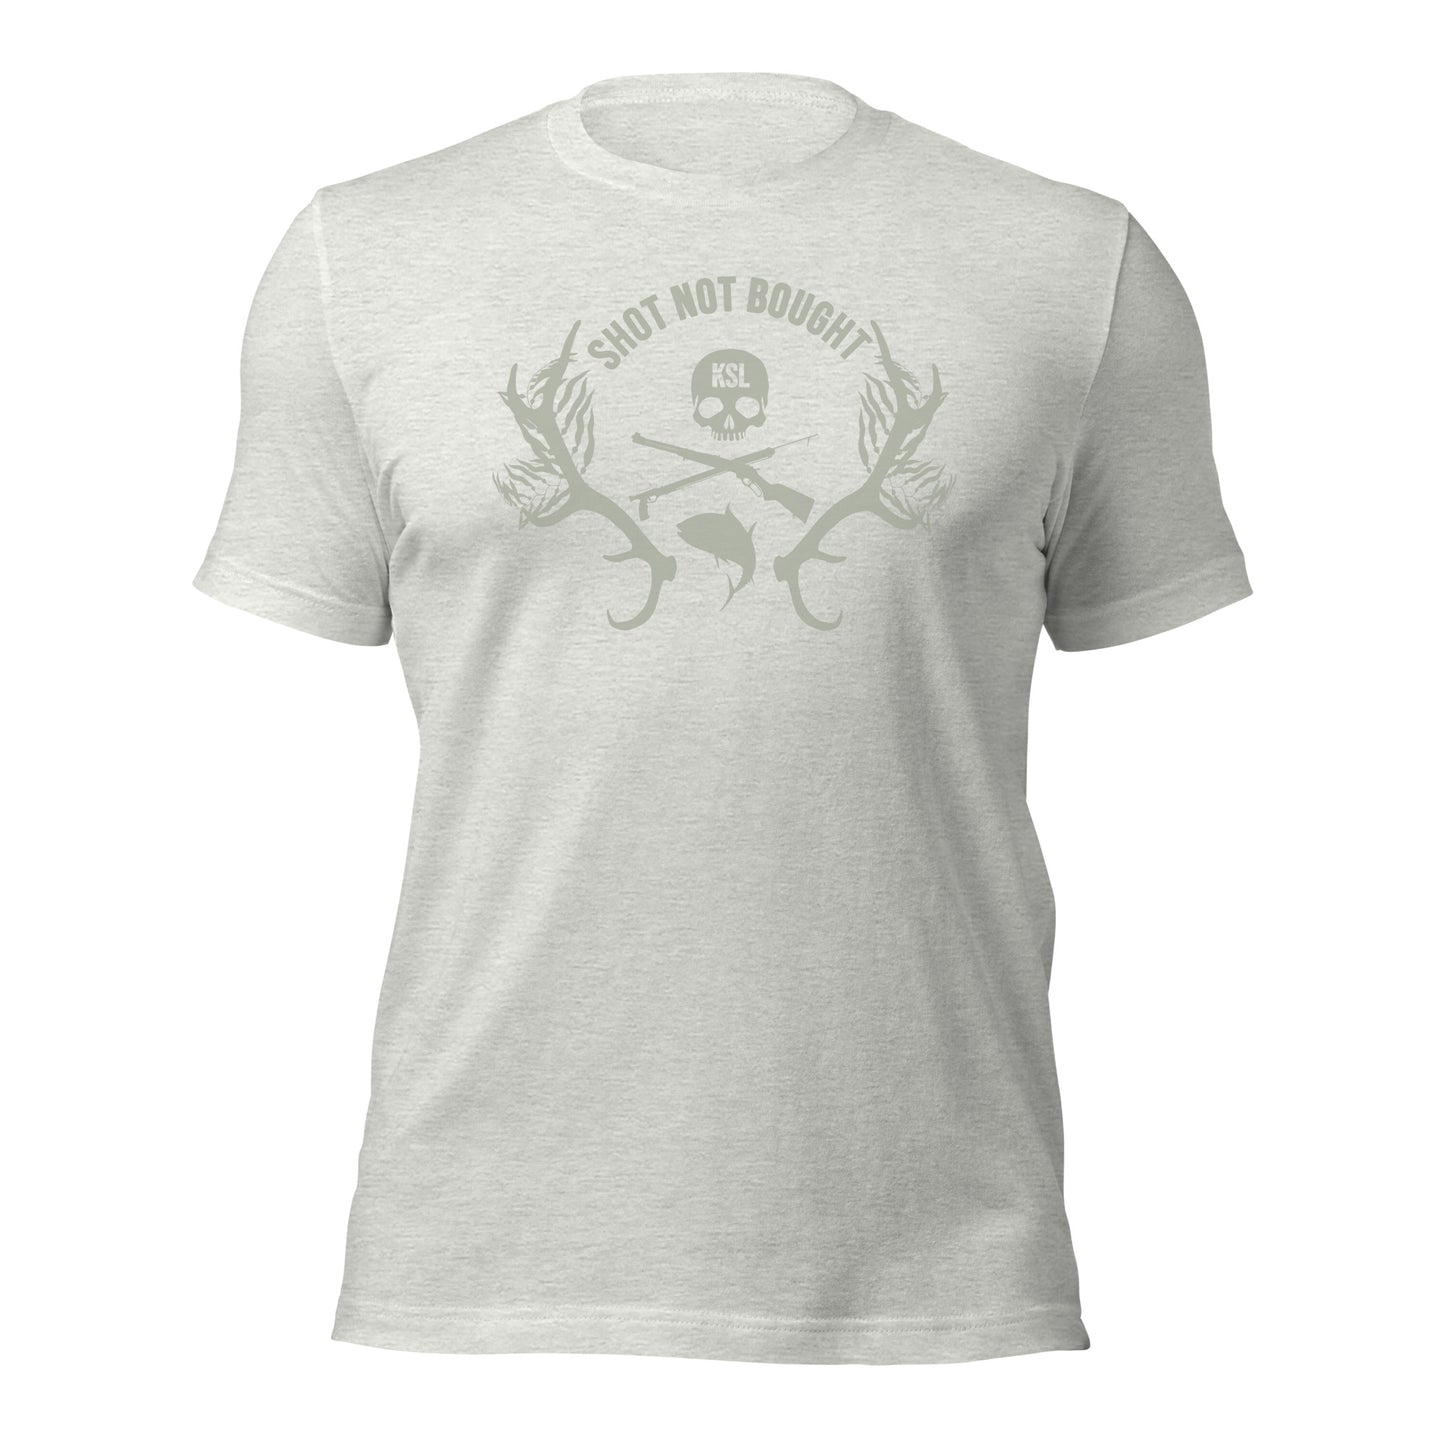 Shot Not Bought Unisex T-Shirt - Antler and Kelp Crest (Tan Print)